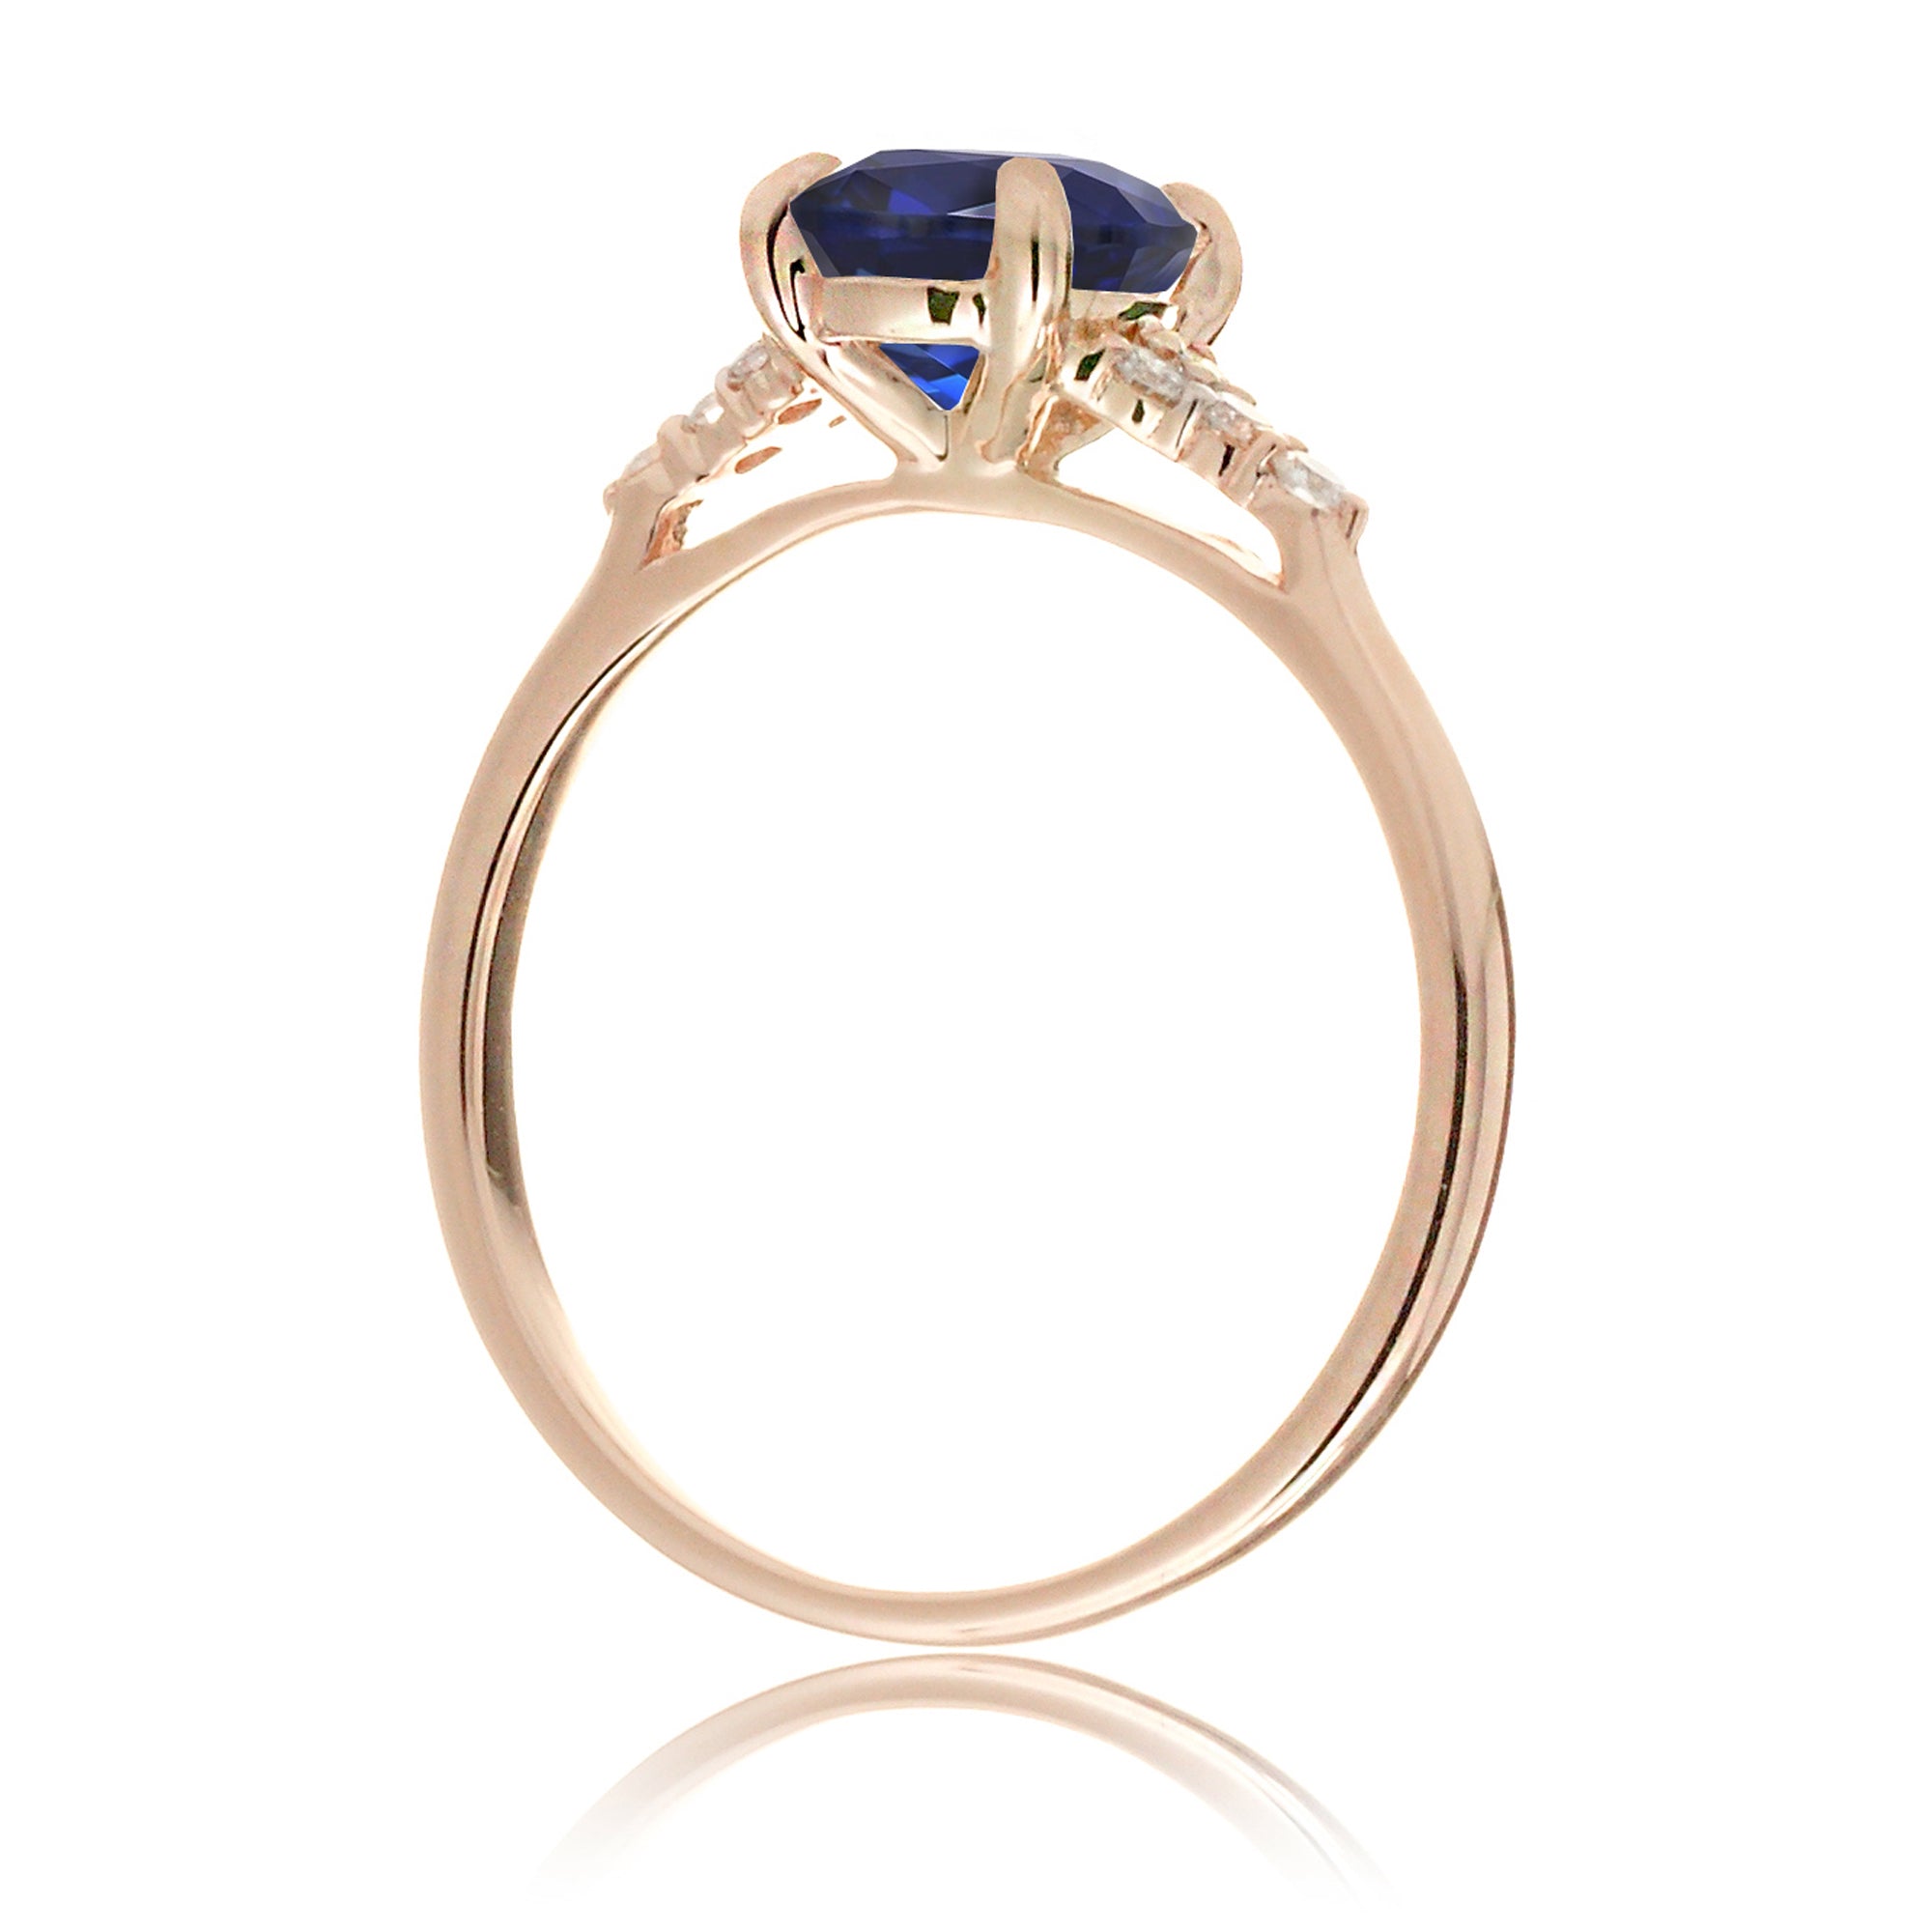 The Chloe Round Cut Blue Sapphire Ring (Lab-Grown)